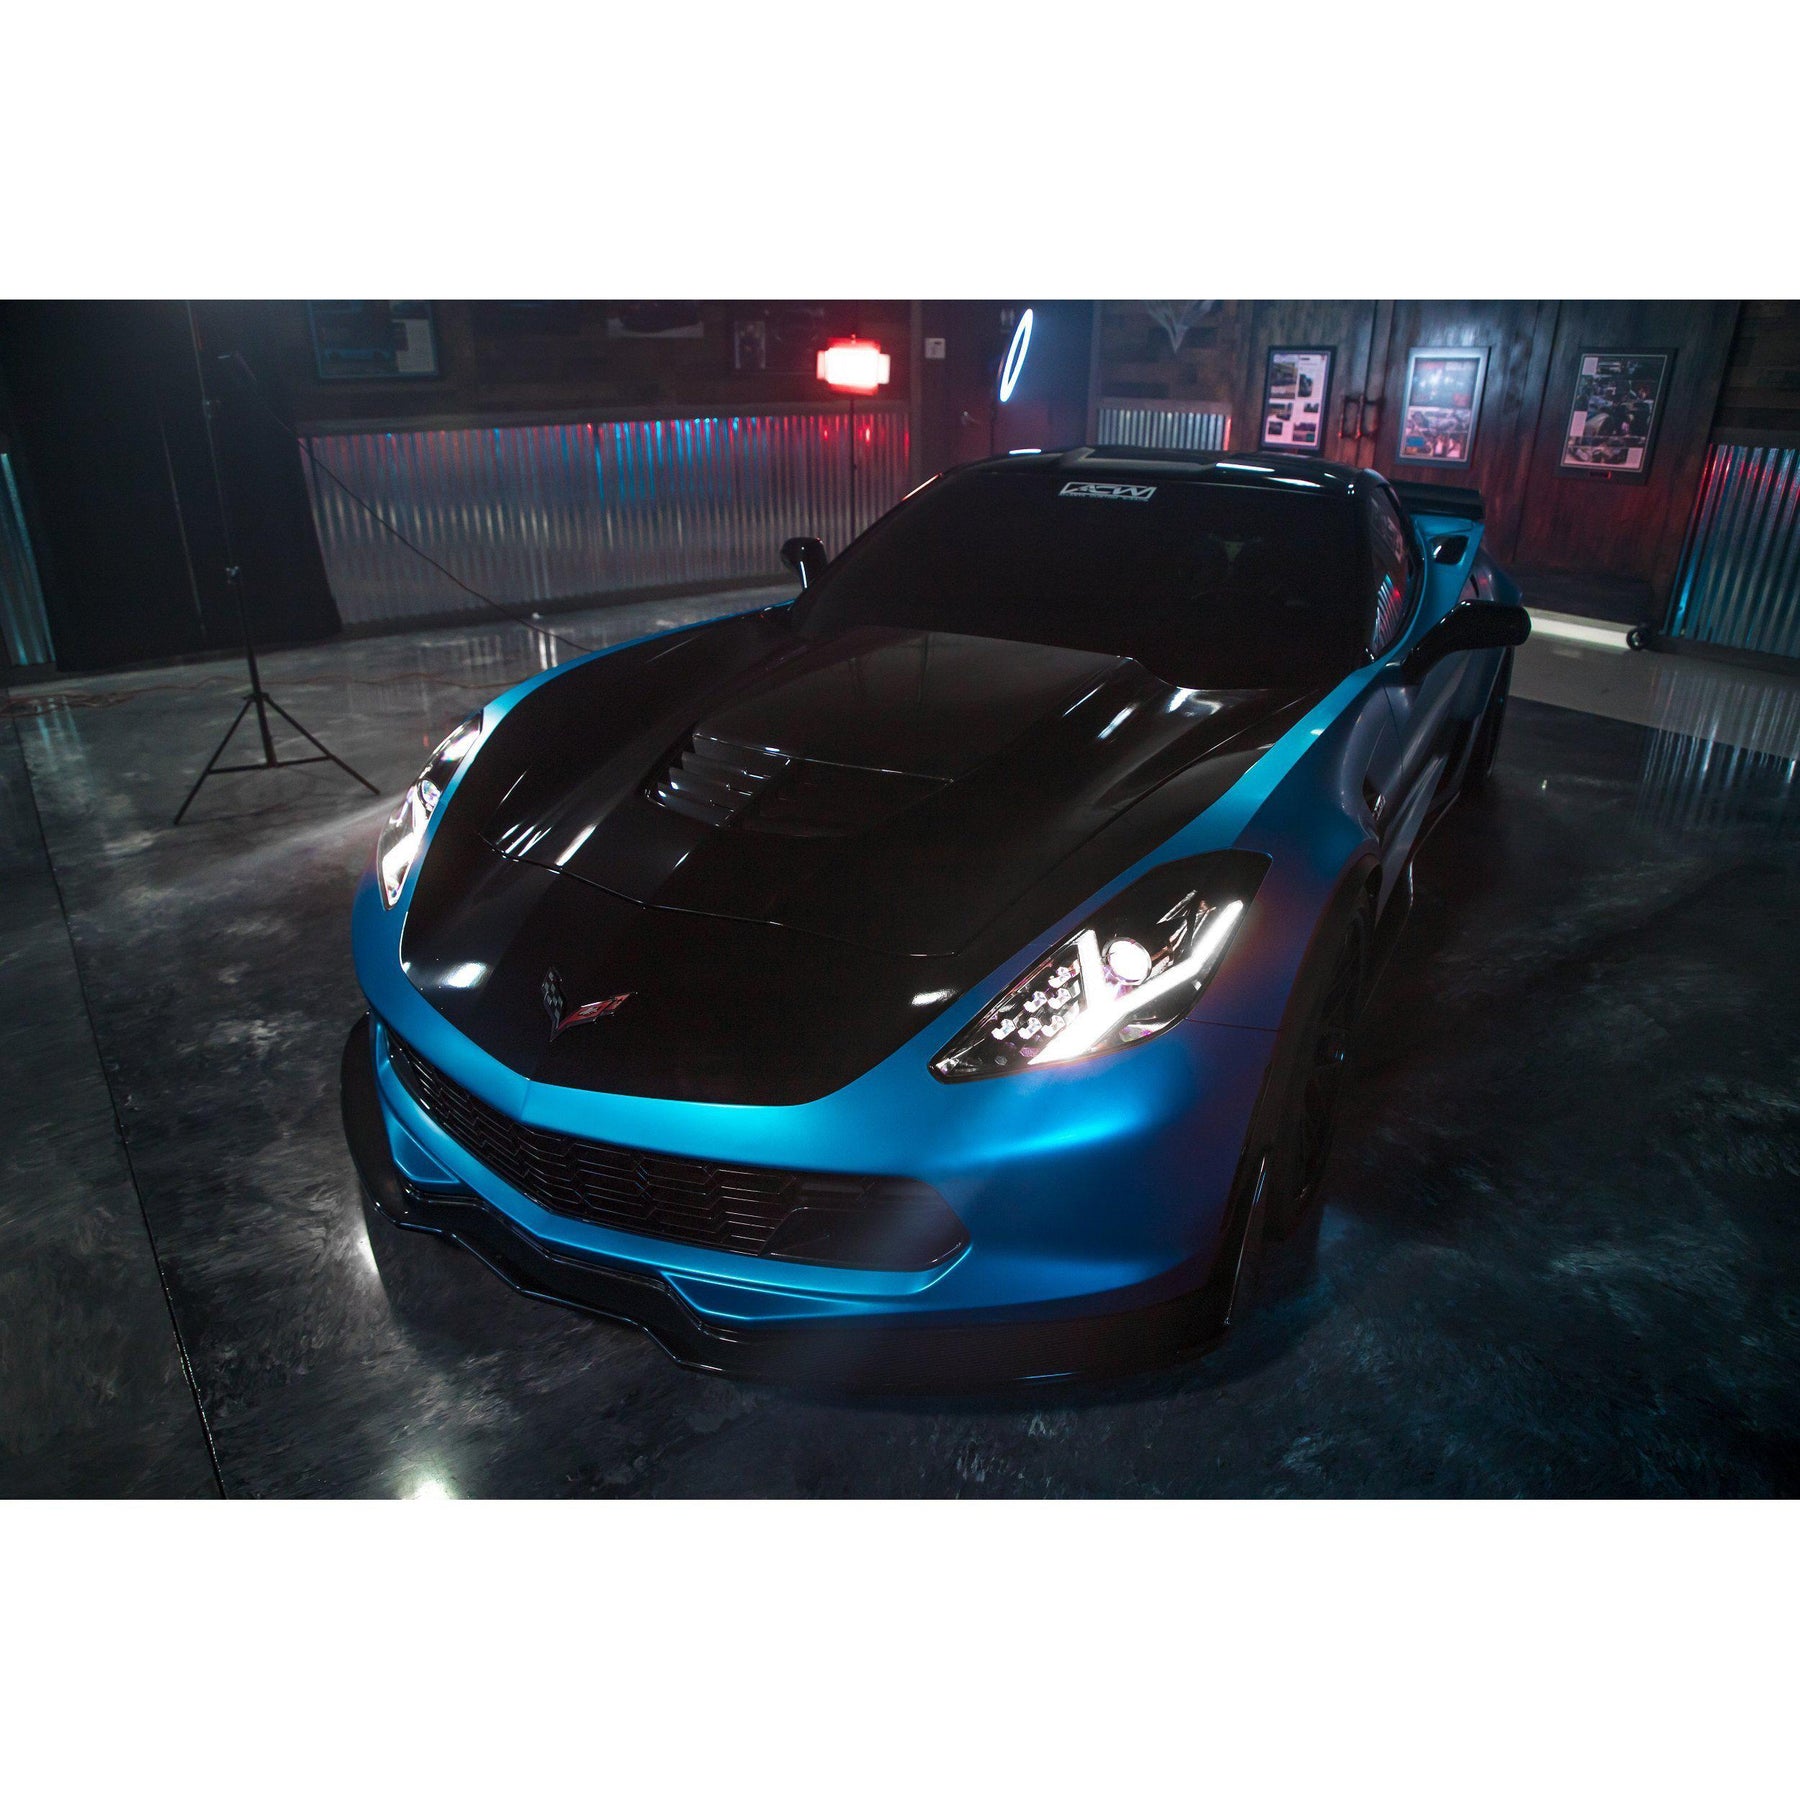 2014-2019 Corvette XB LED Black Headlights (LF463)-Headlights-Morimoto-LF463-Dirty Diesel Customs